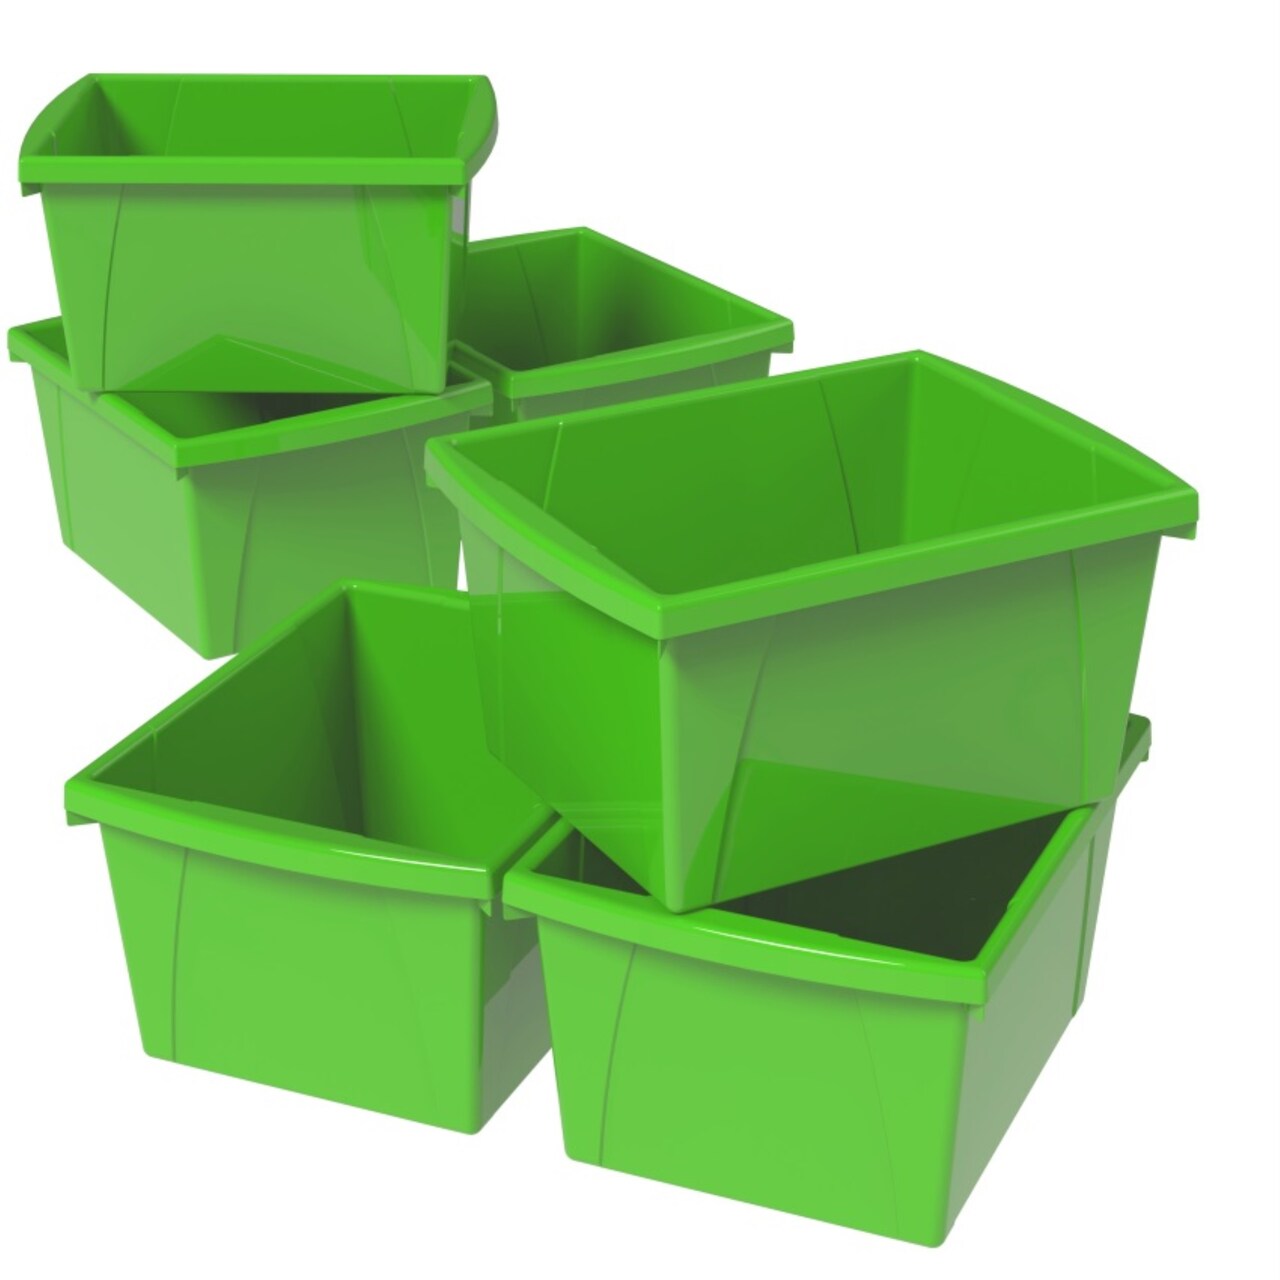 4 Gallon (15L) Classroom Storage Bin, Green (Case of 6)